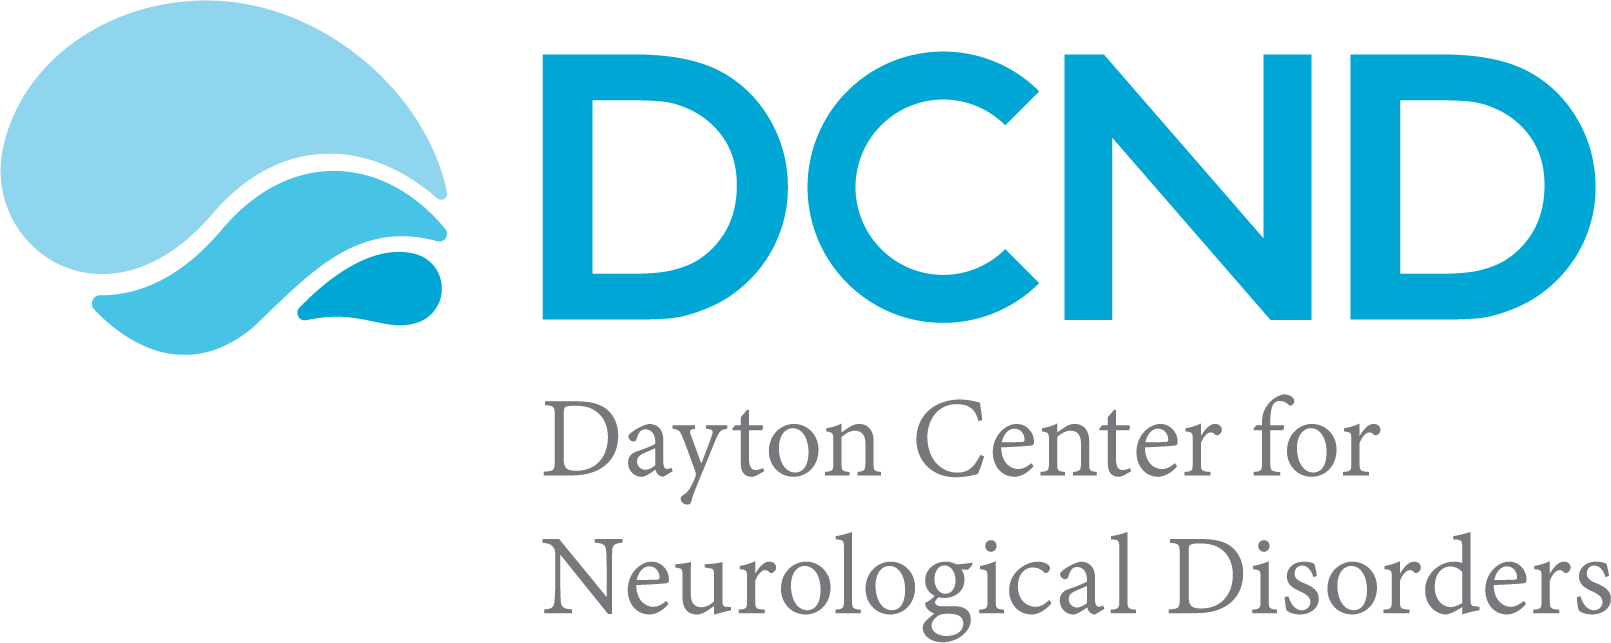 DCND-Logo-M-002.png